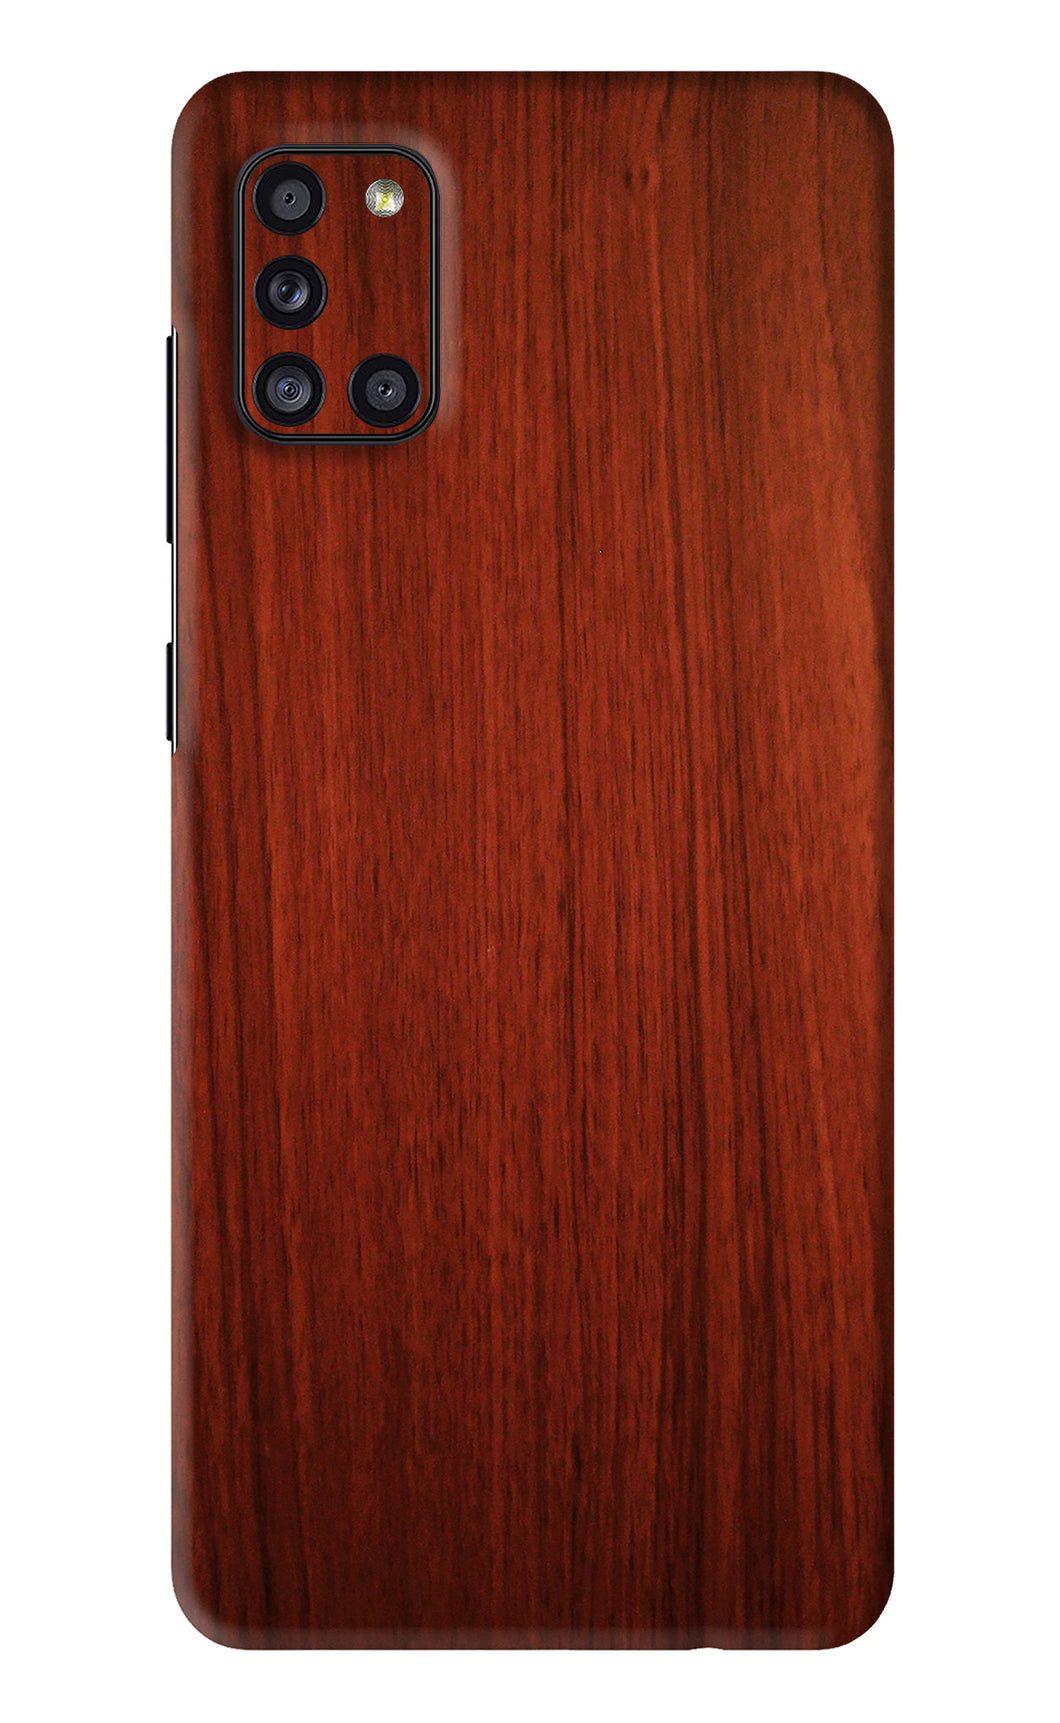 Wooden Plain Pattern Samsung Galaxy A31 Back Skin Wrap